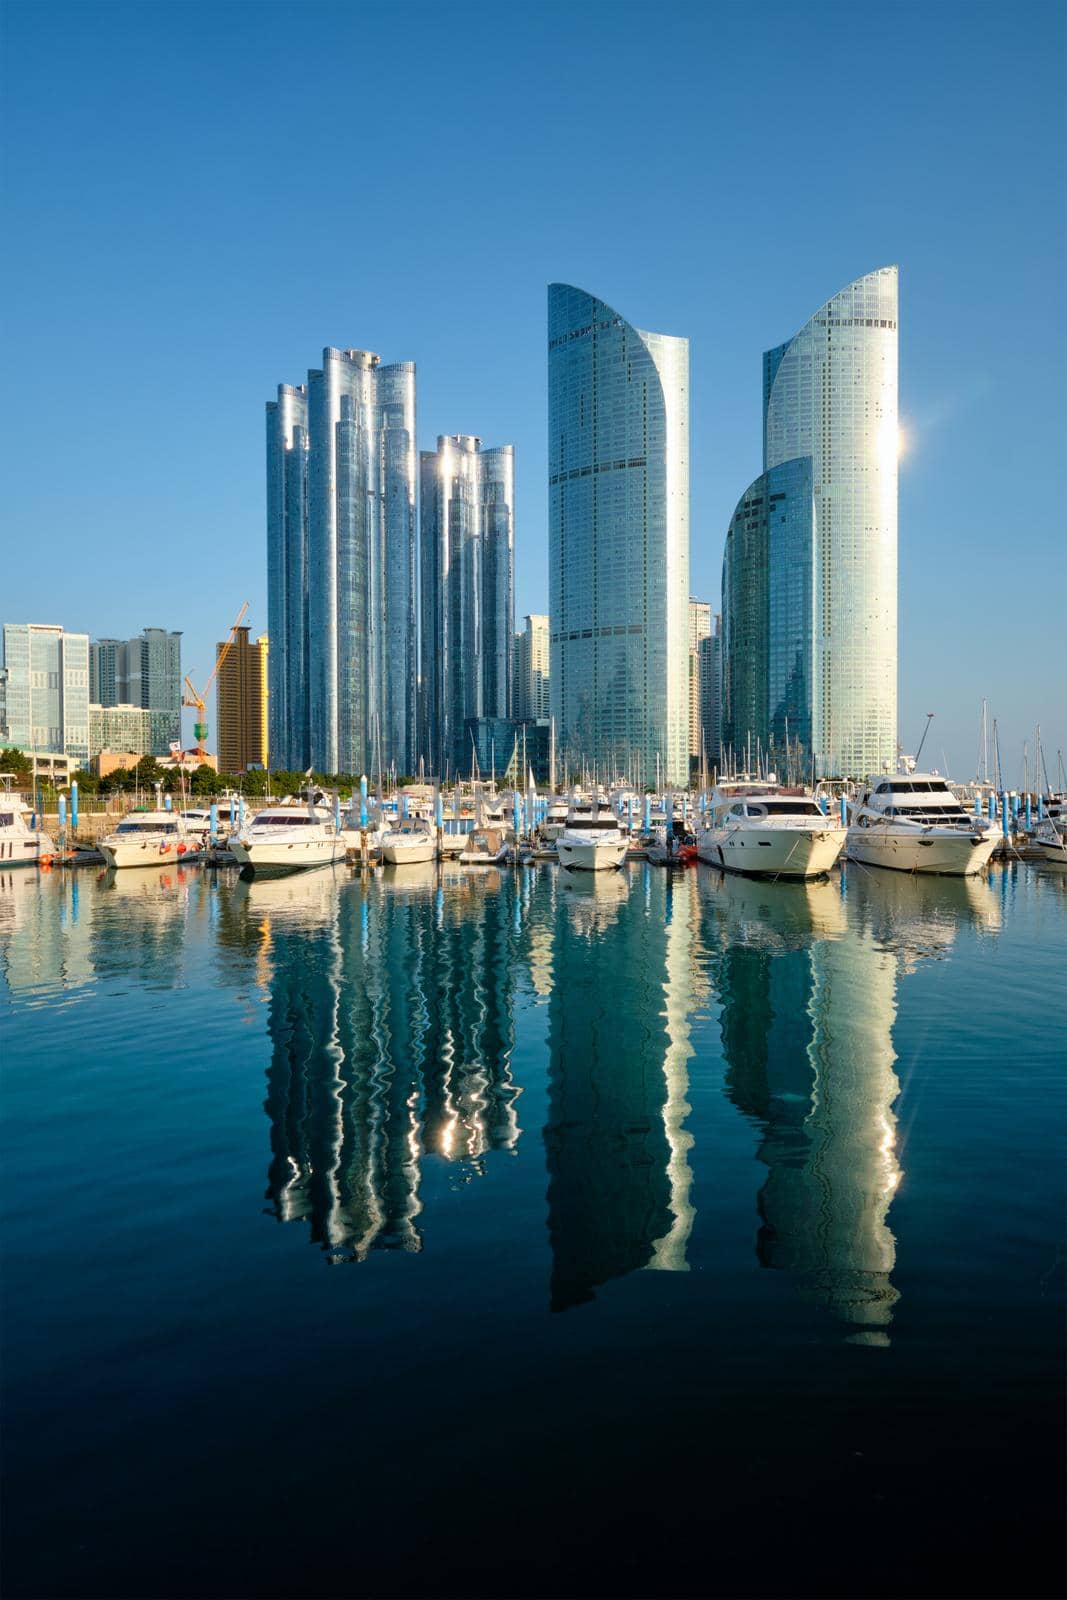 Busan marina with yachts, Marina city skyscrapers with reflection, South Korea